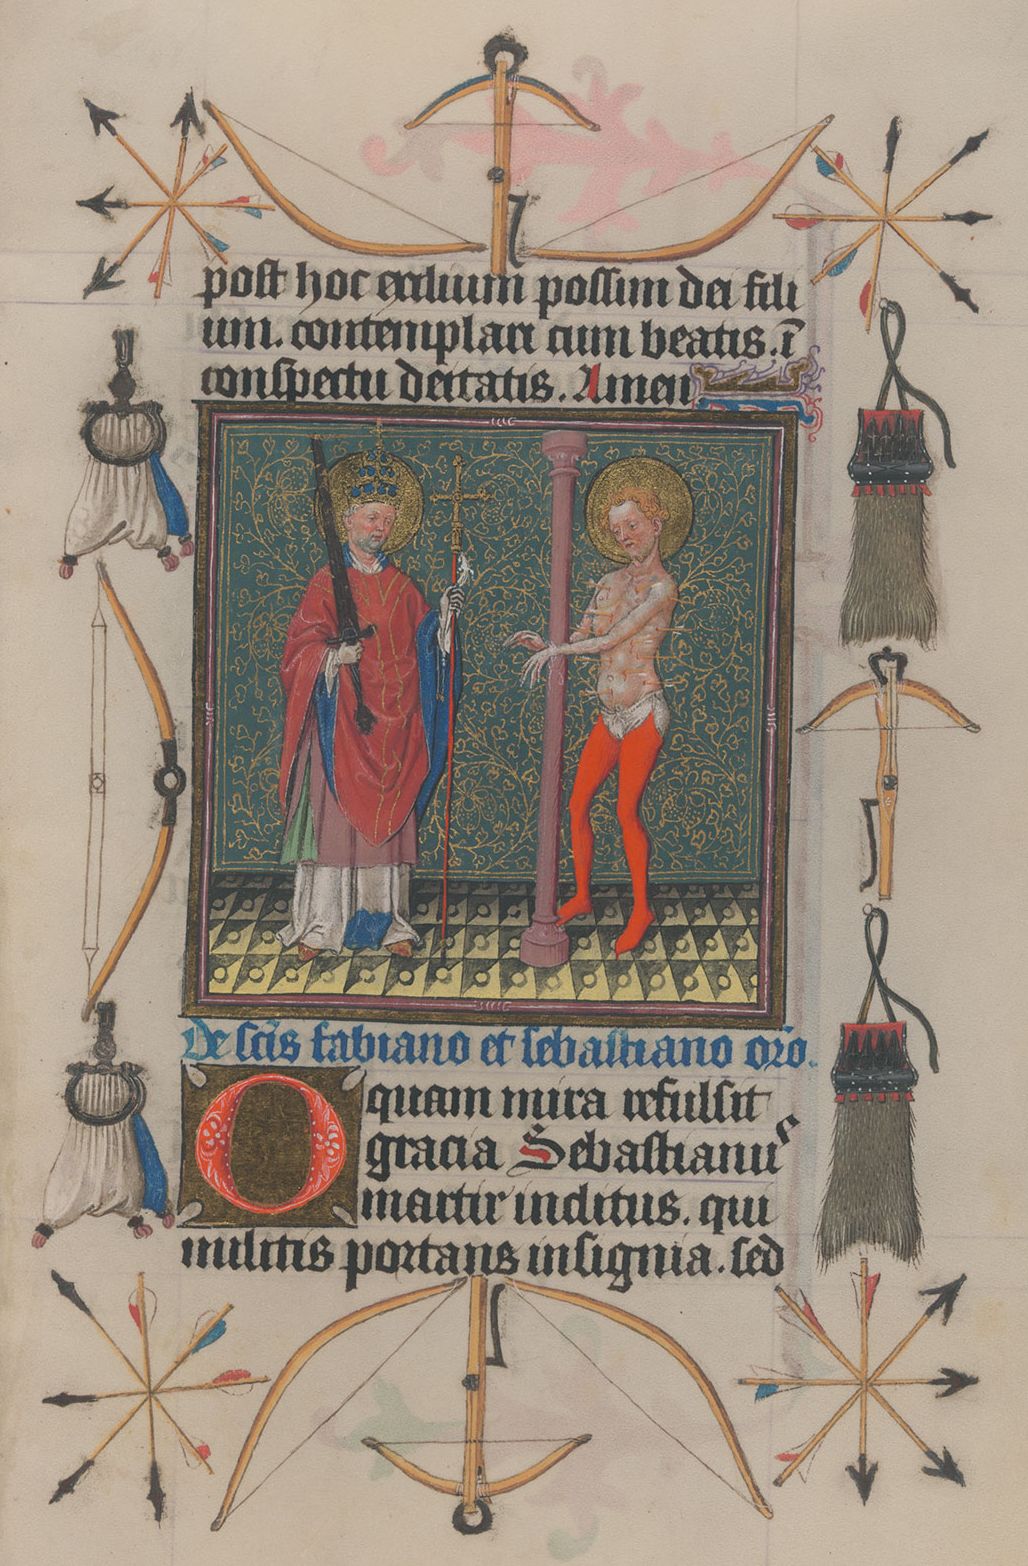 Pyhä Sebastian, Book of Hours, MS M.917/945 pp. 253, ca. 1440